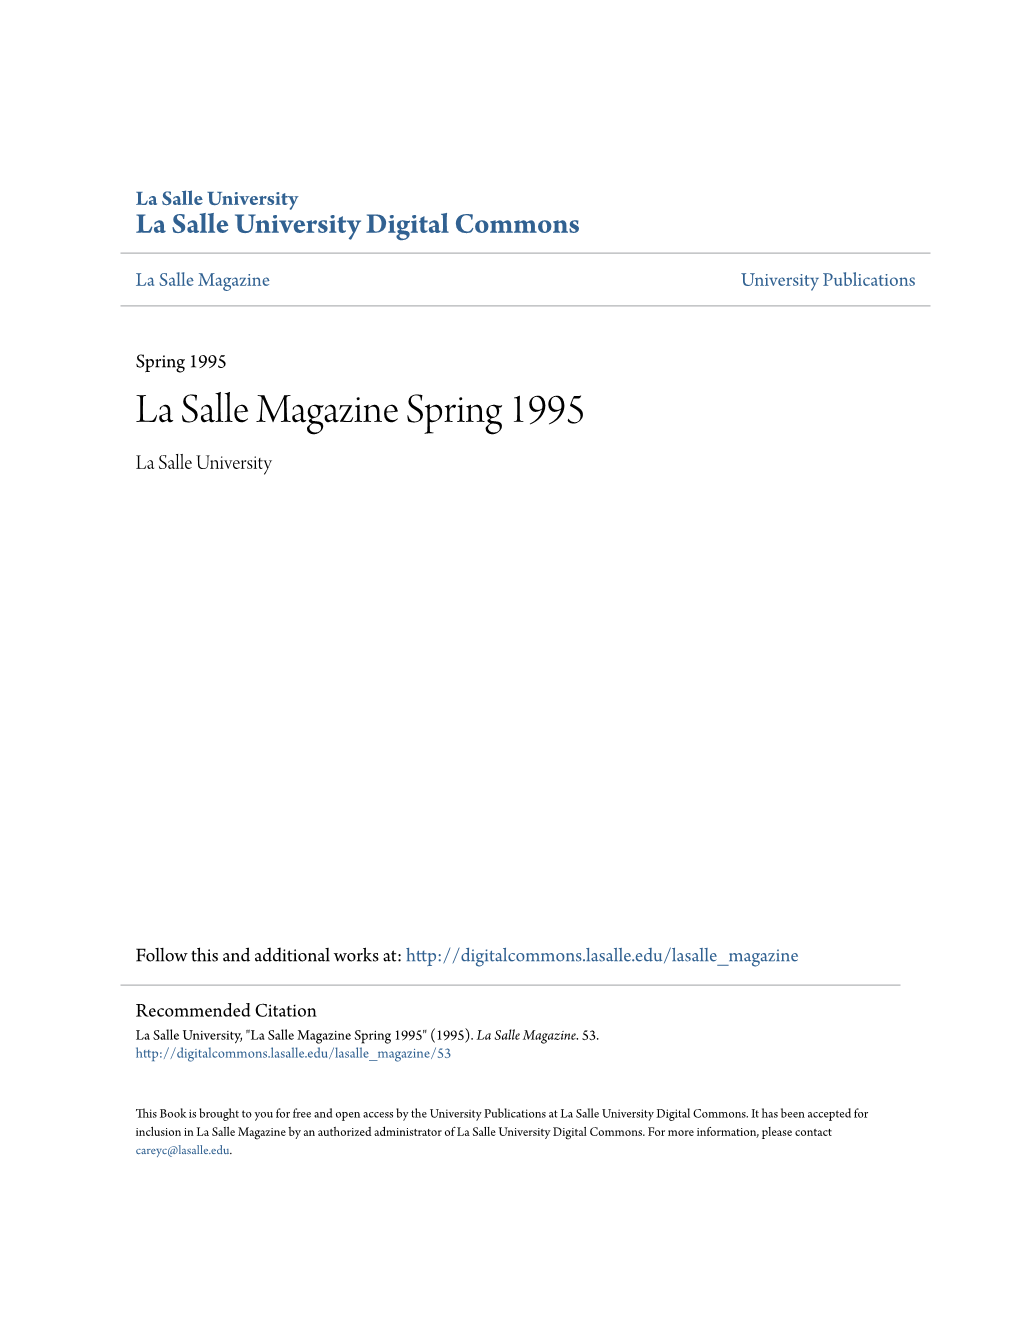 La Salle Magazine Spring 1995 La Salle University